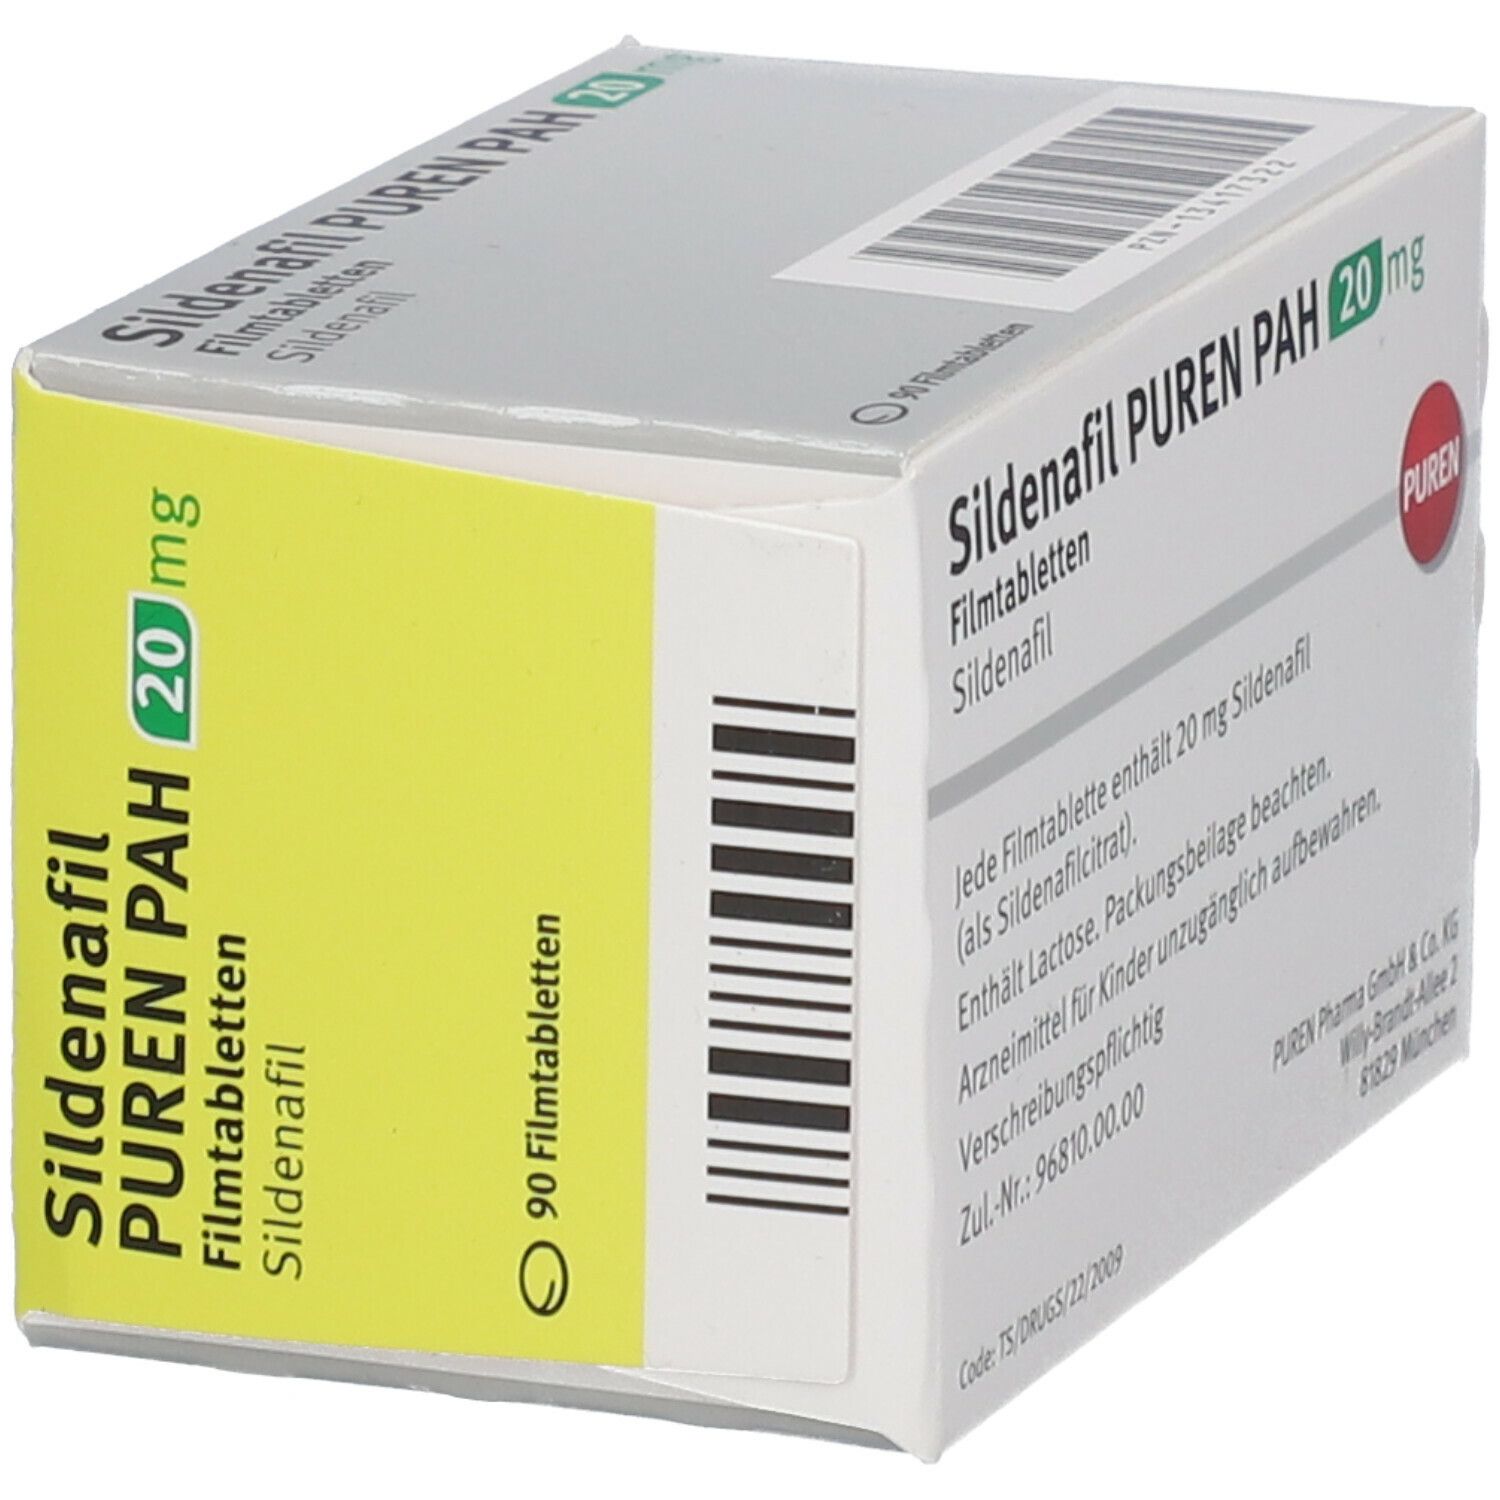 Sildenafil PUREN PAH 20 mg